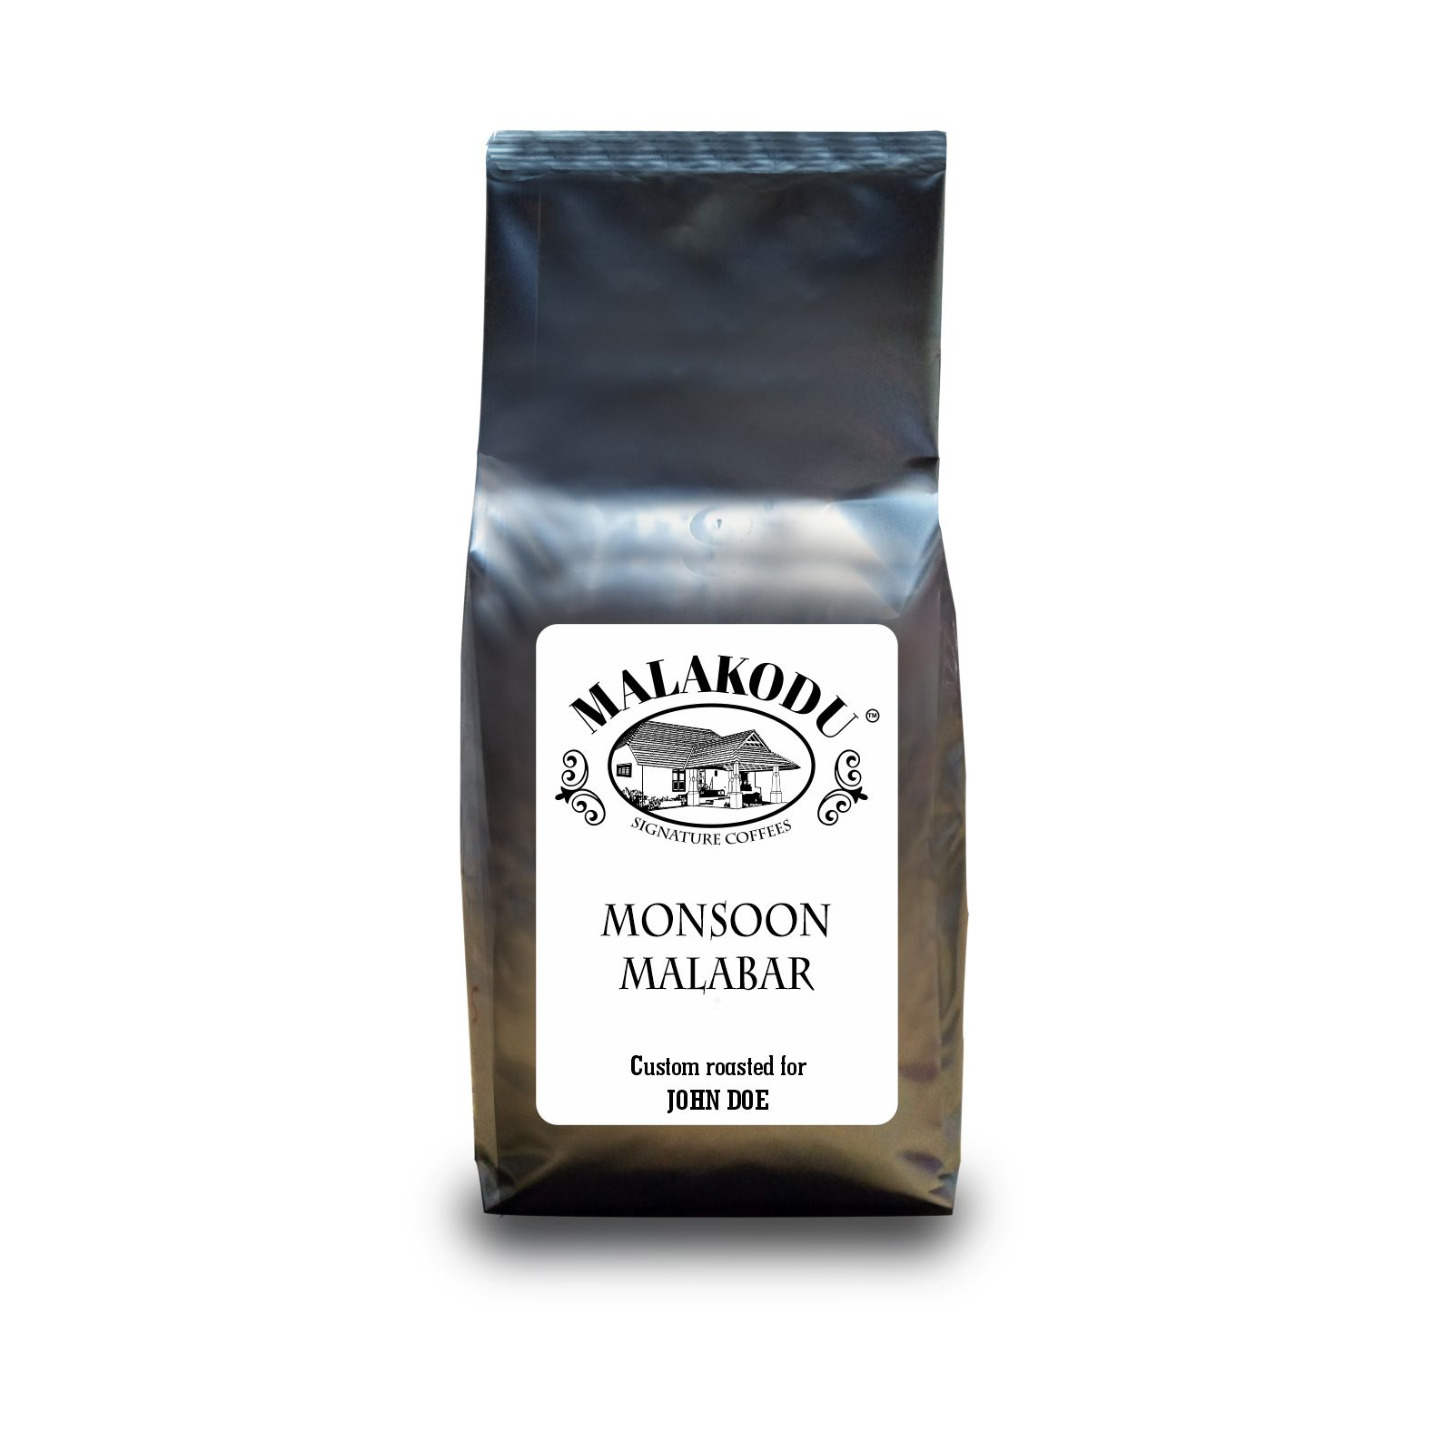 MALAKODU - Monsoon Malabar roasted coffee beans 450 gms  950 gms